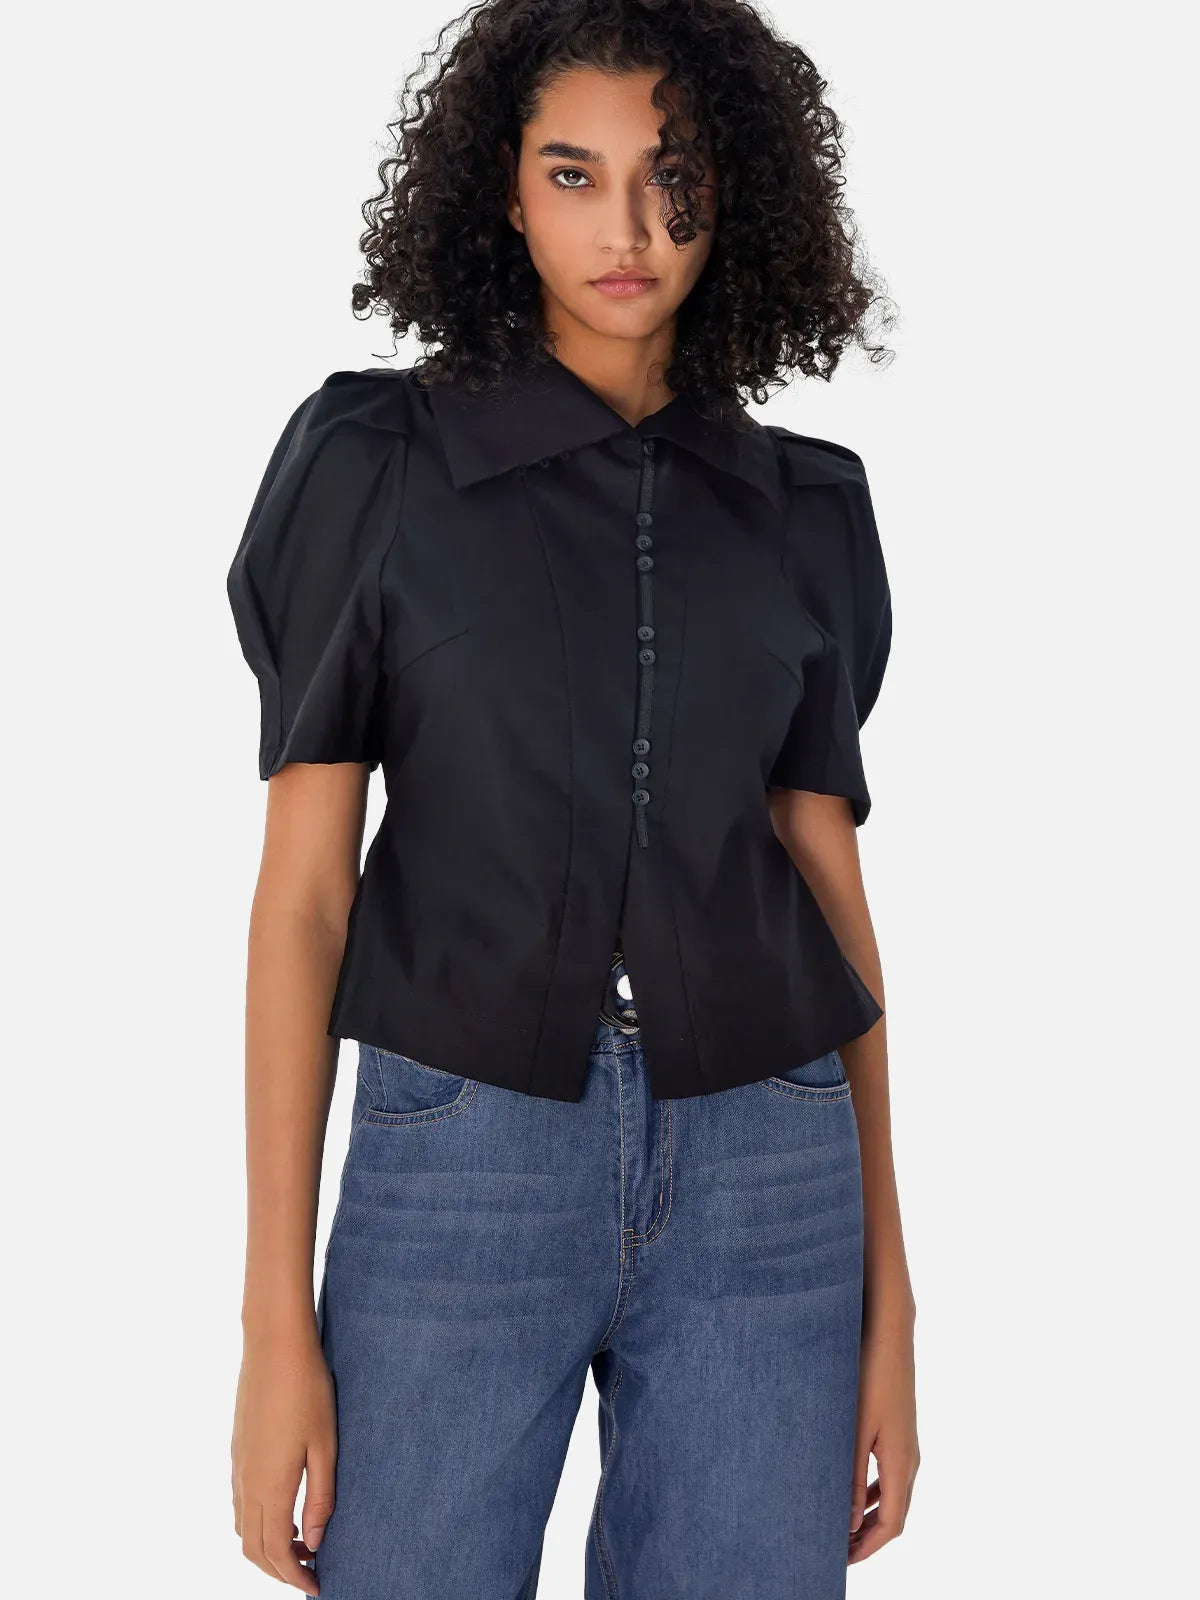 Vintage turn-down collar bubble sleeve blouse